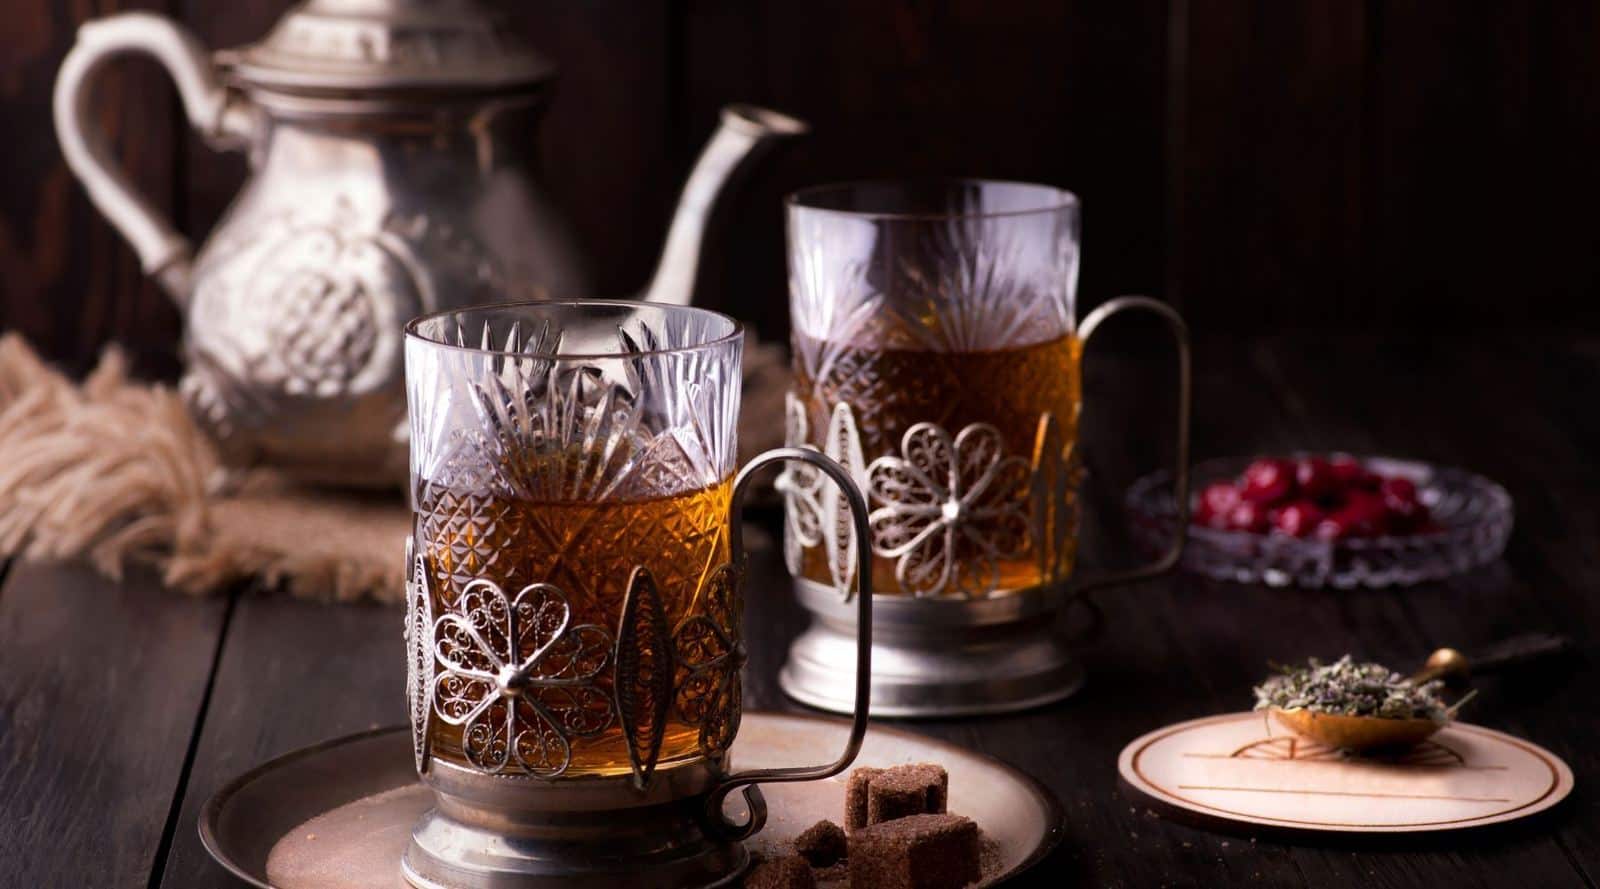 ceylon tea: nothing but the finest tea in the world!